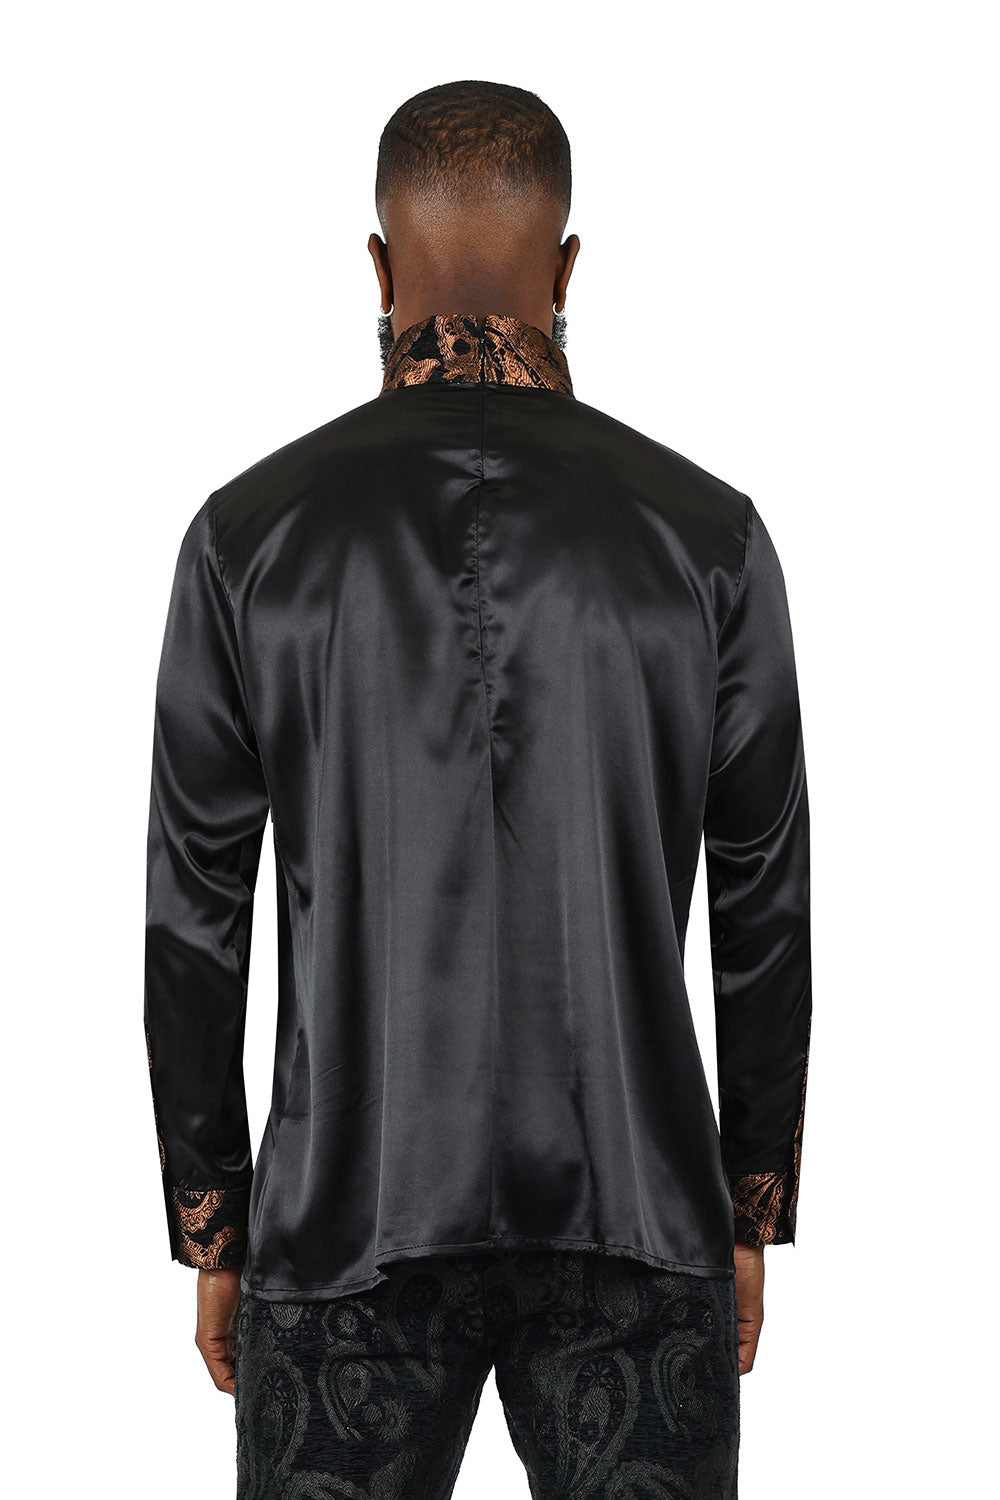 BARABAS Men's Paisley Long Sleeve Turtle Neck shirt 3MT05 Black and Coffee